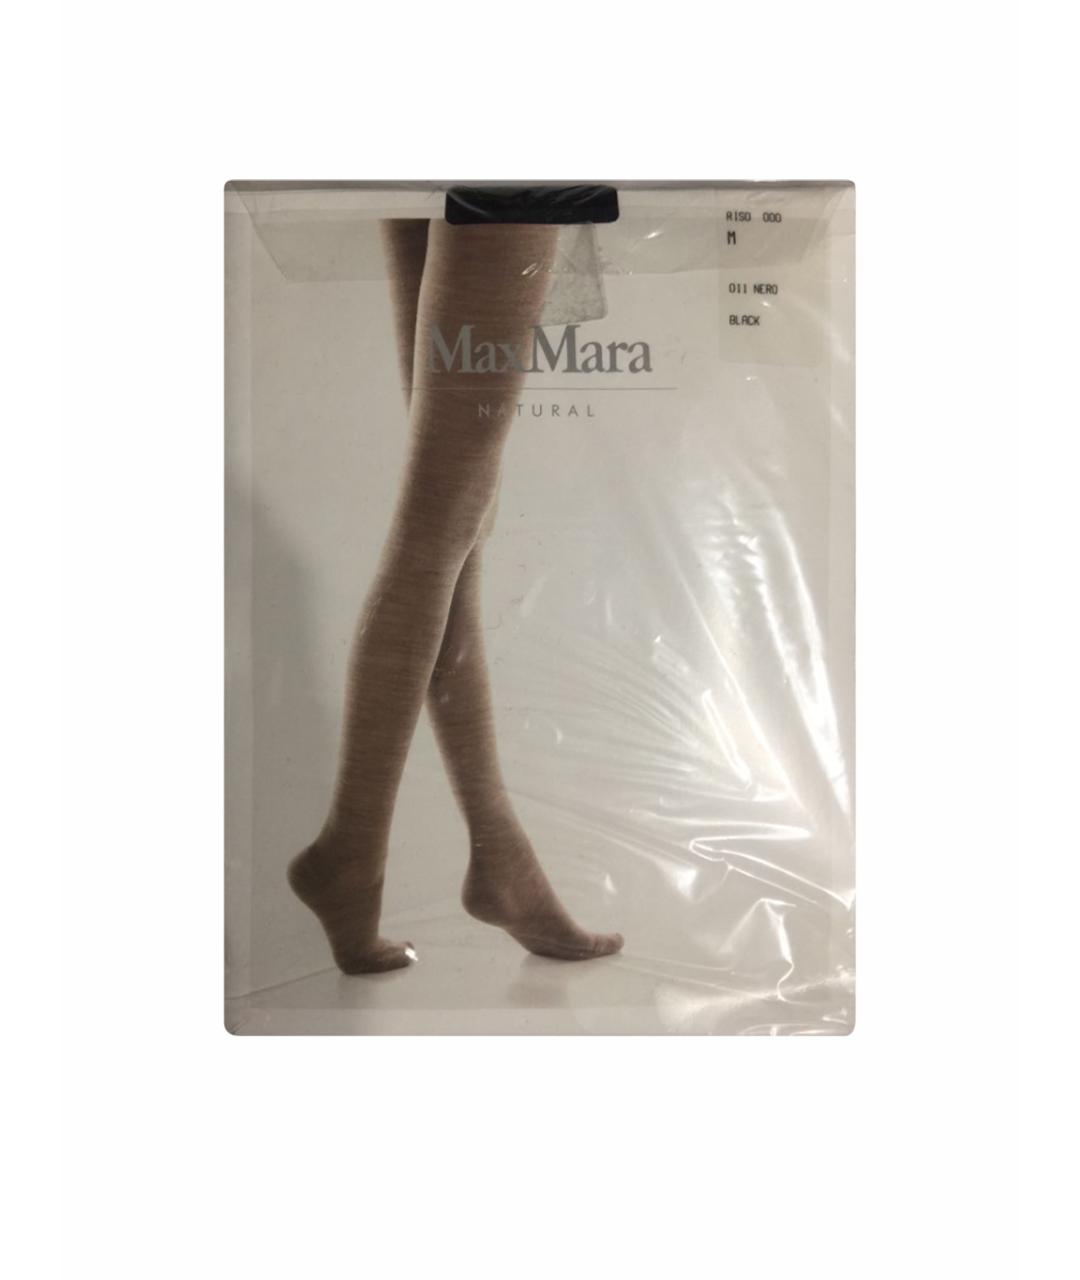 MAX MARA Черные носки, чулки и колготы, фото 1